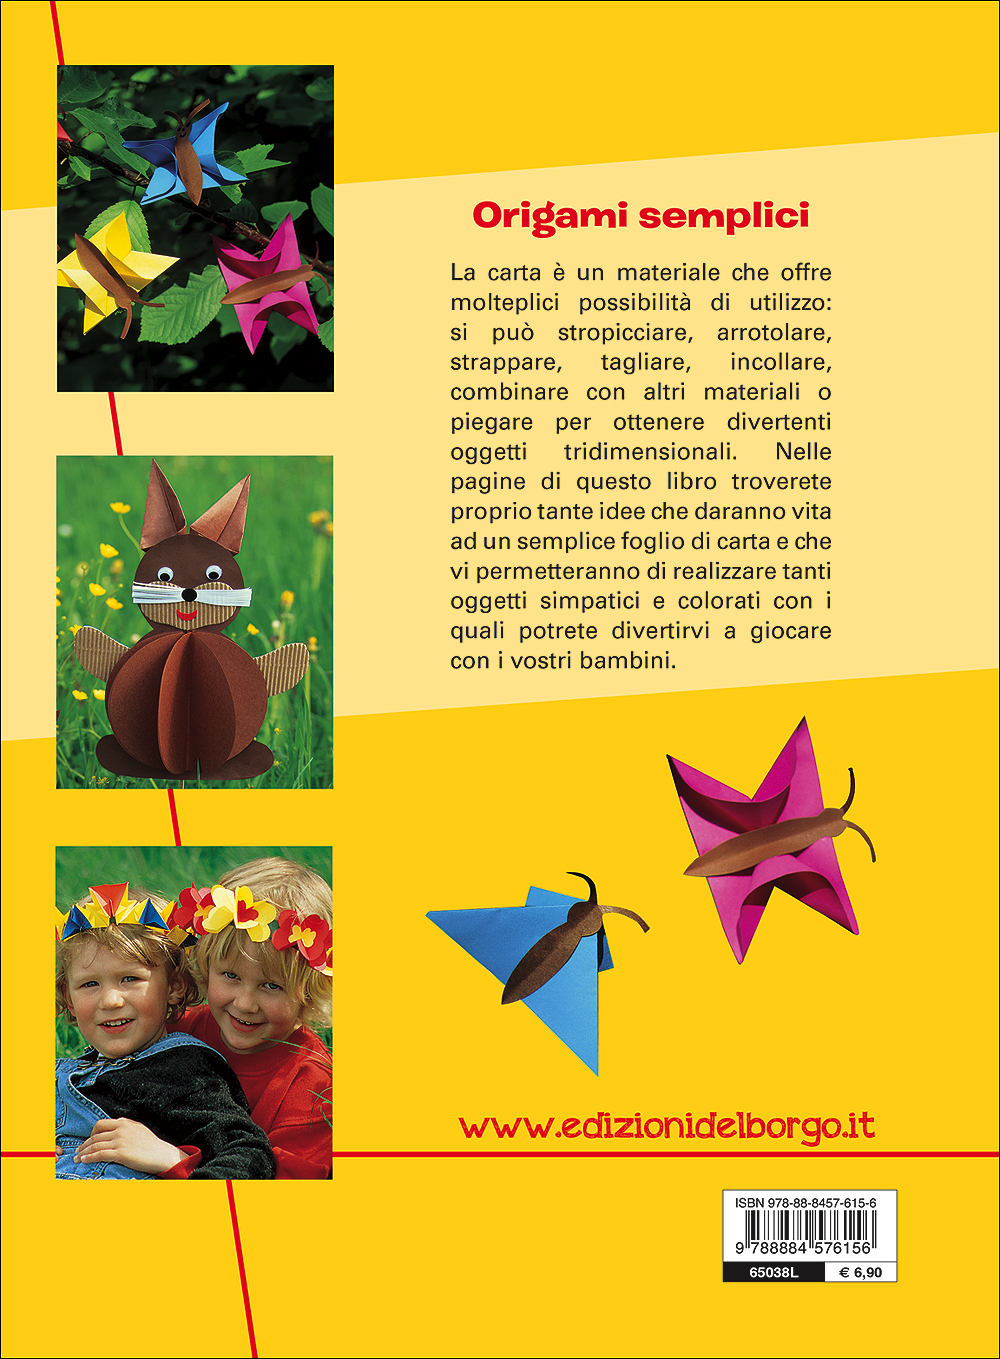 Origami semplici